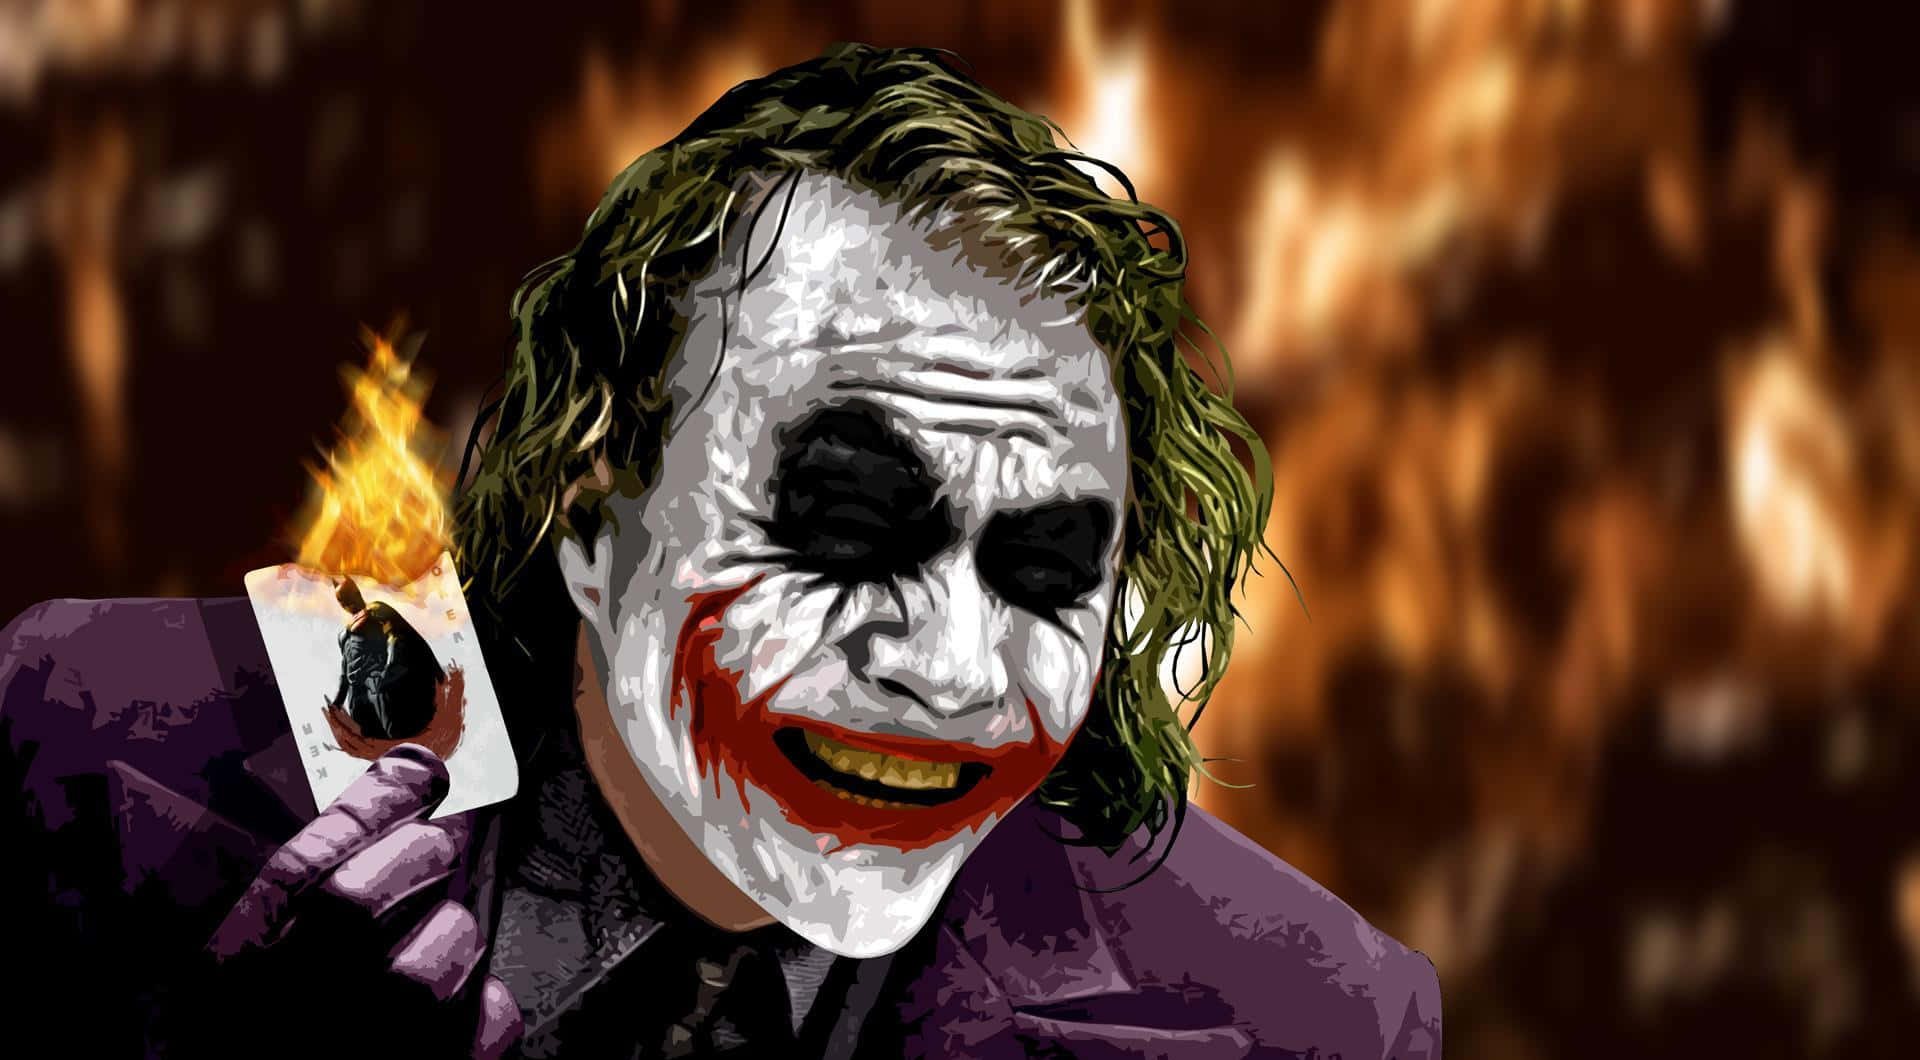 Sinister Joker Laughing In Vibrant Colors